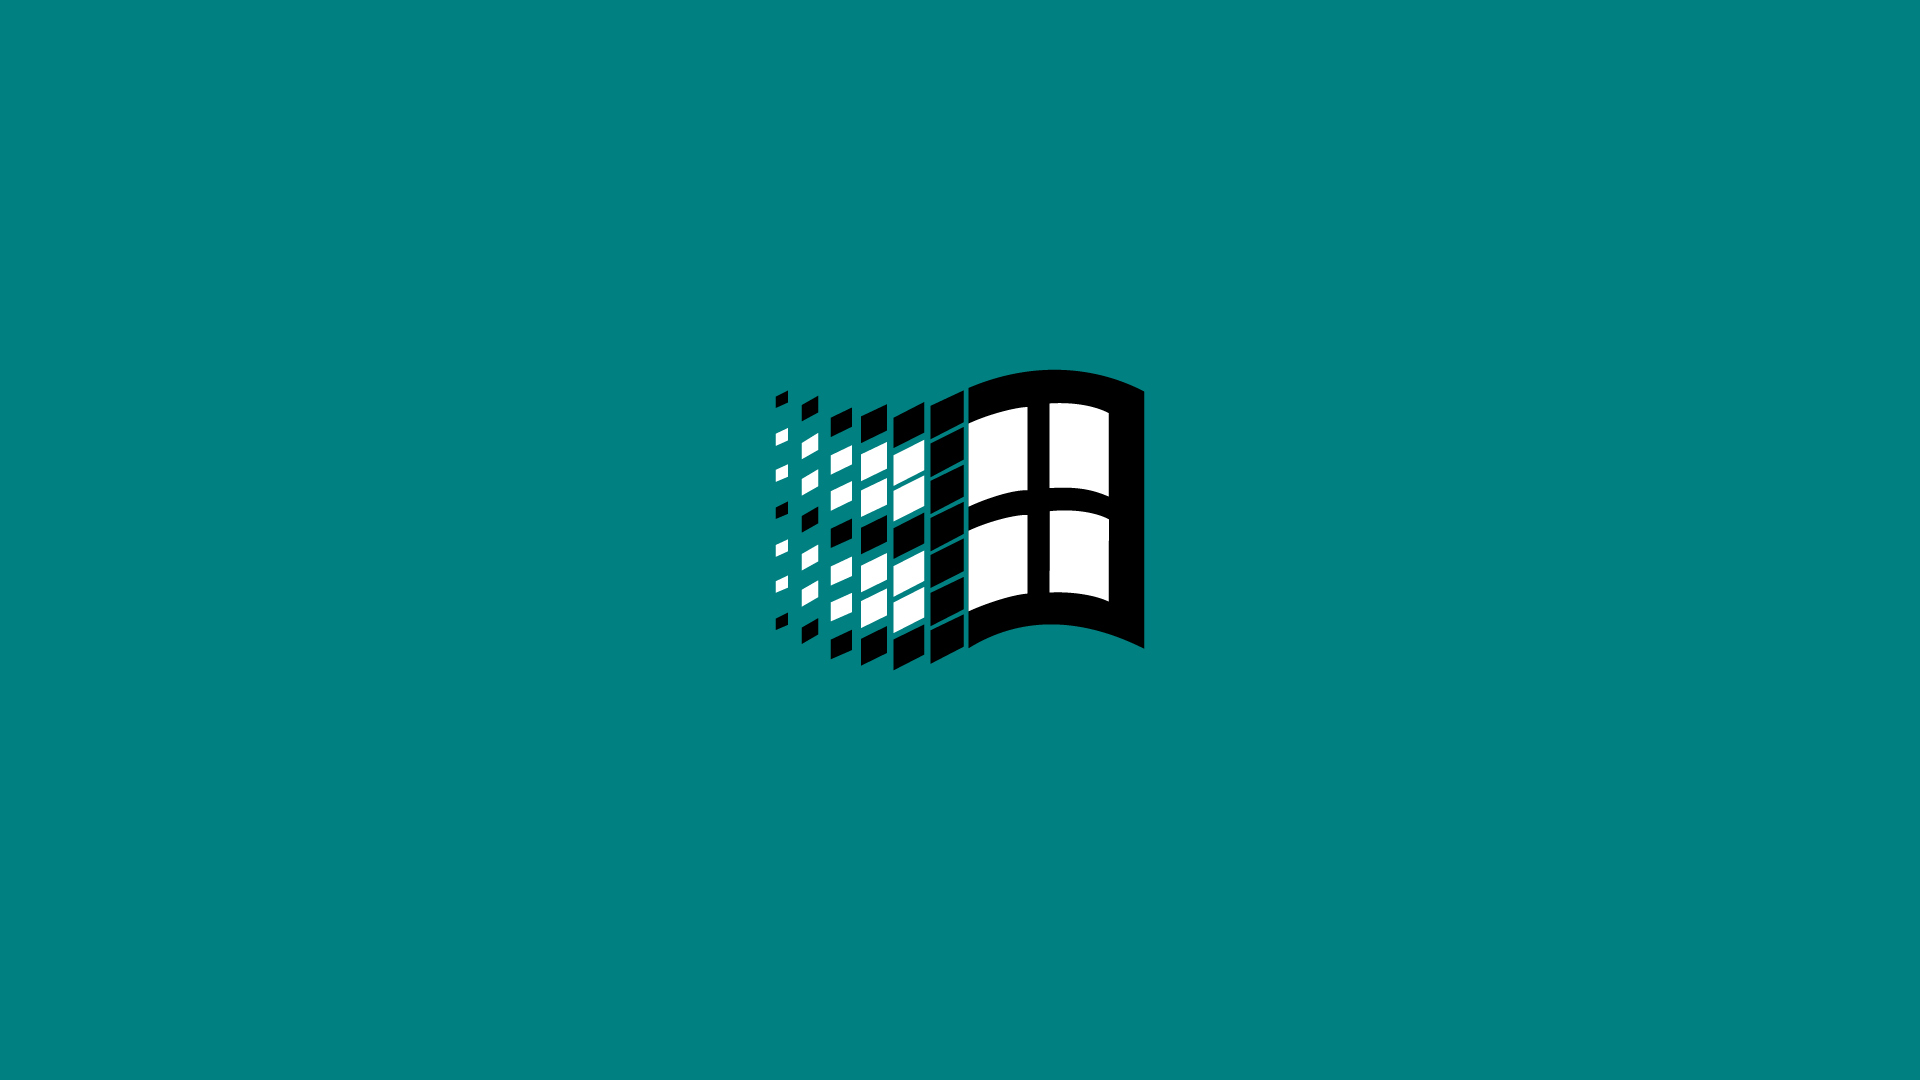 Windows 95 Desktop Wallpaper 19x1080